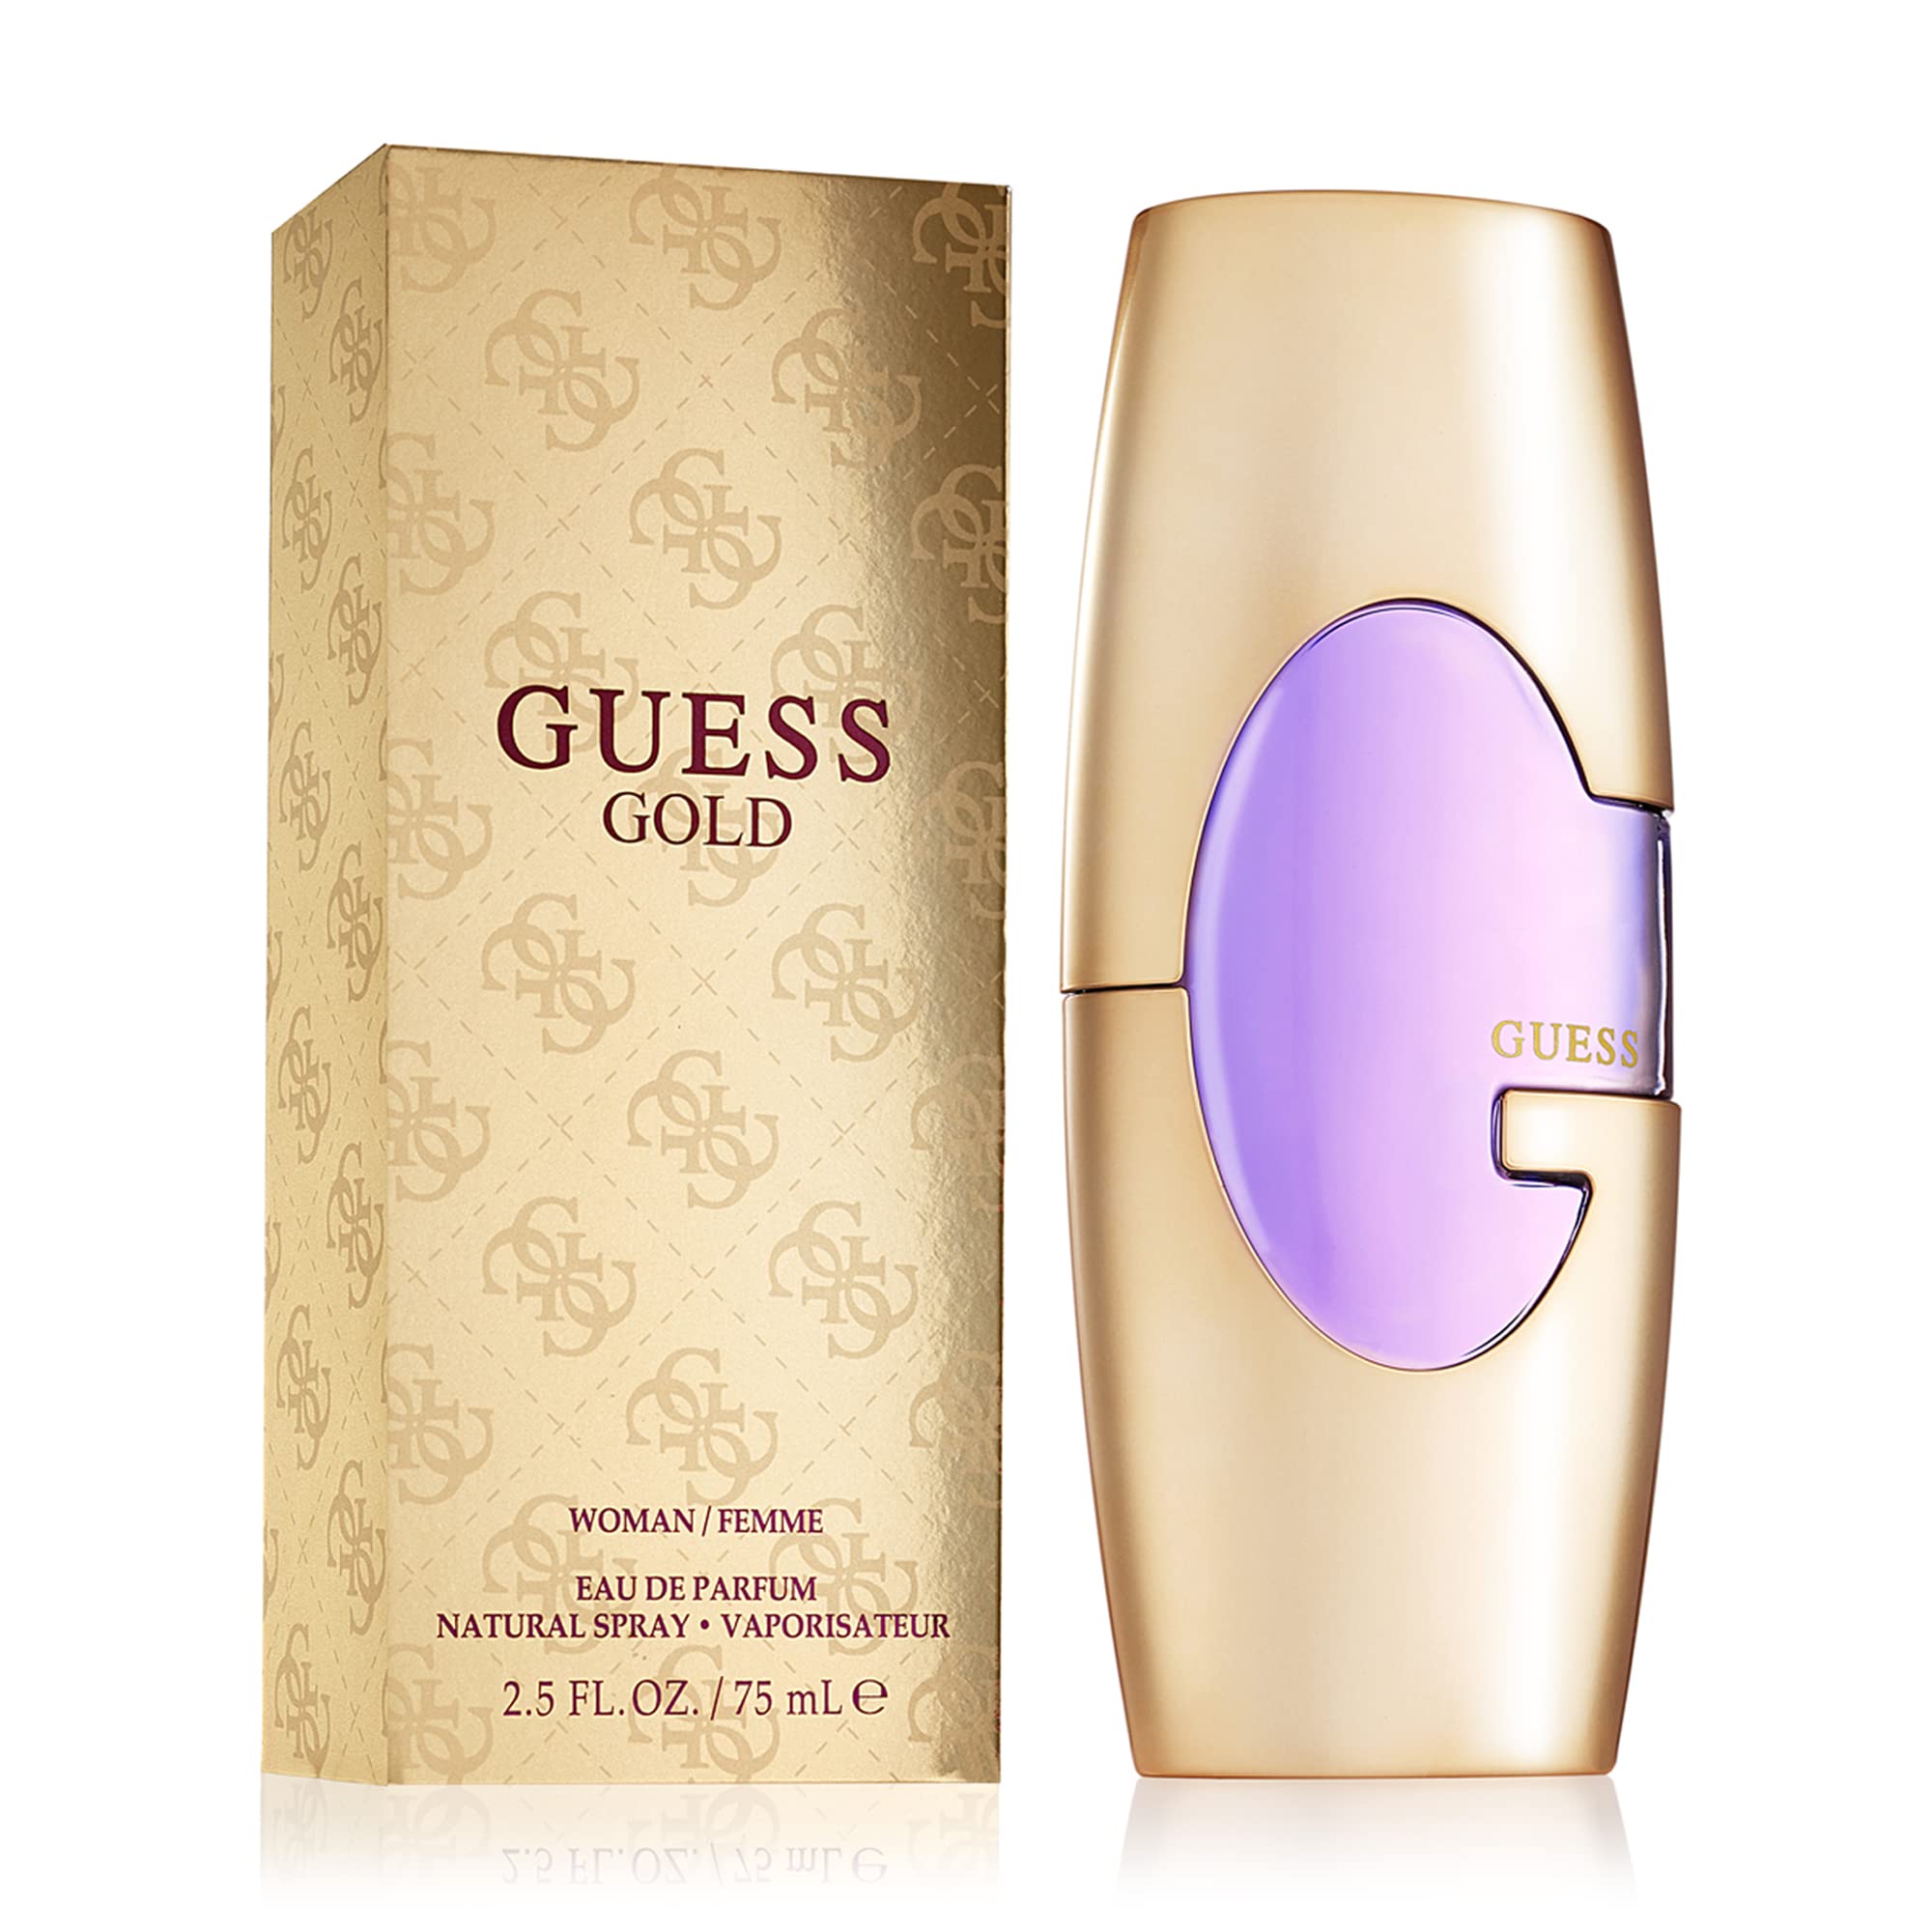 acheter Guess Gold by Guess Eau De Parfum Spray 2.5 oz / 75 ml (Women) vDQHkqgQ8 grand